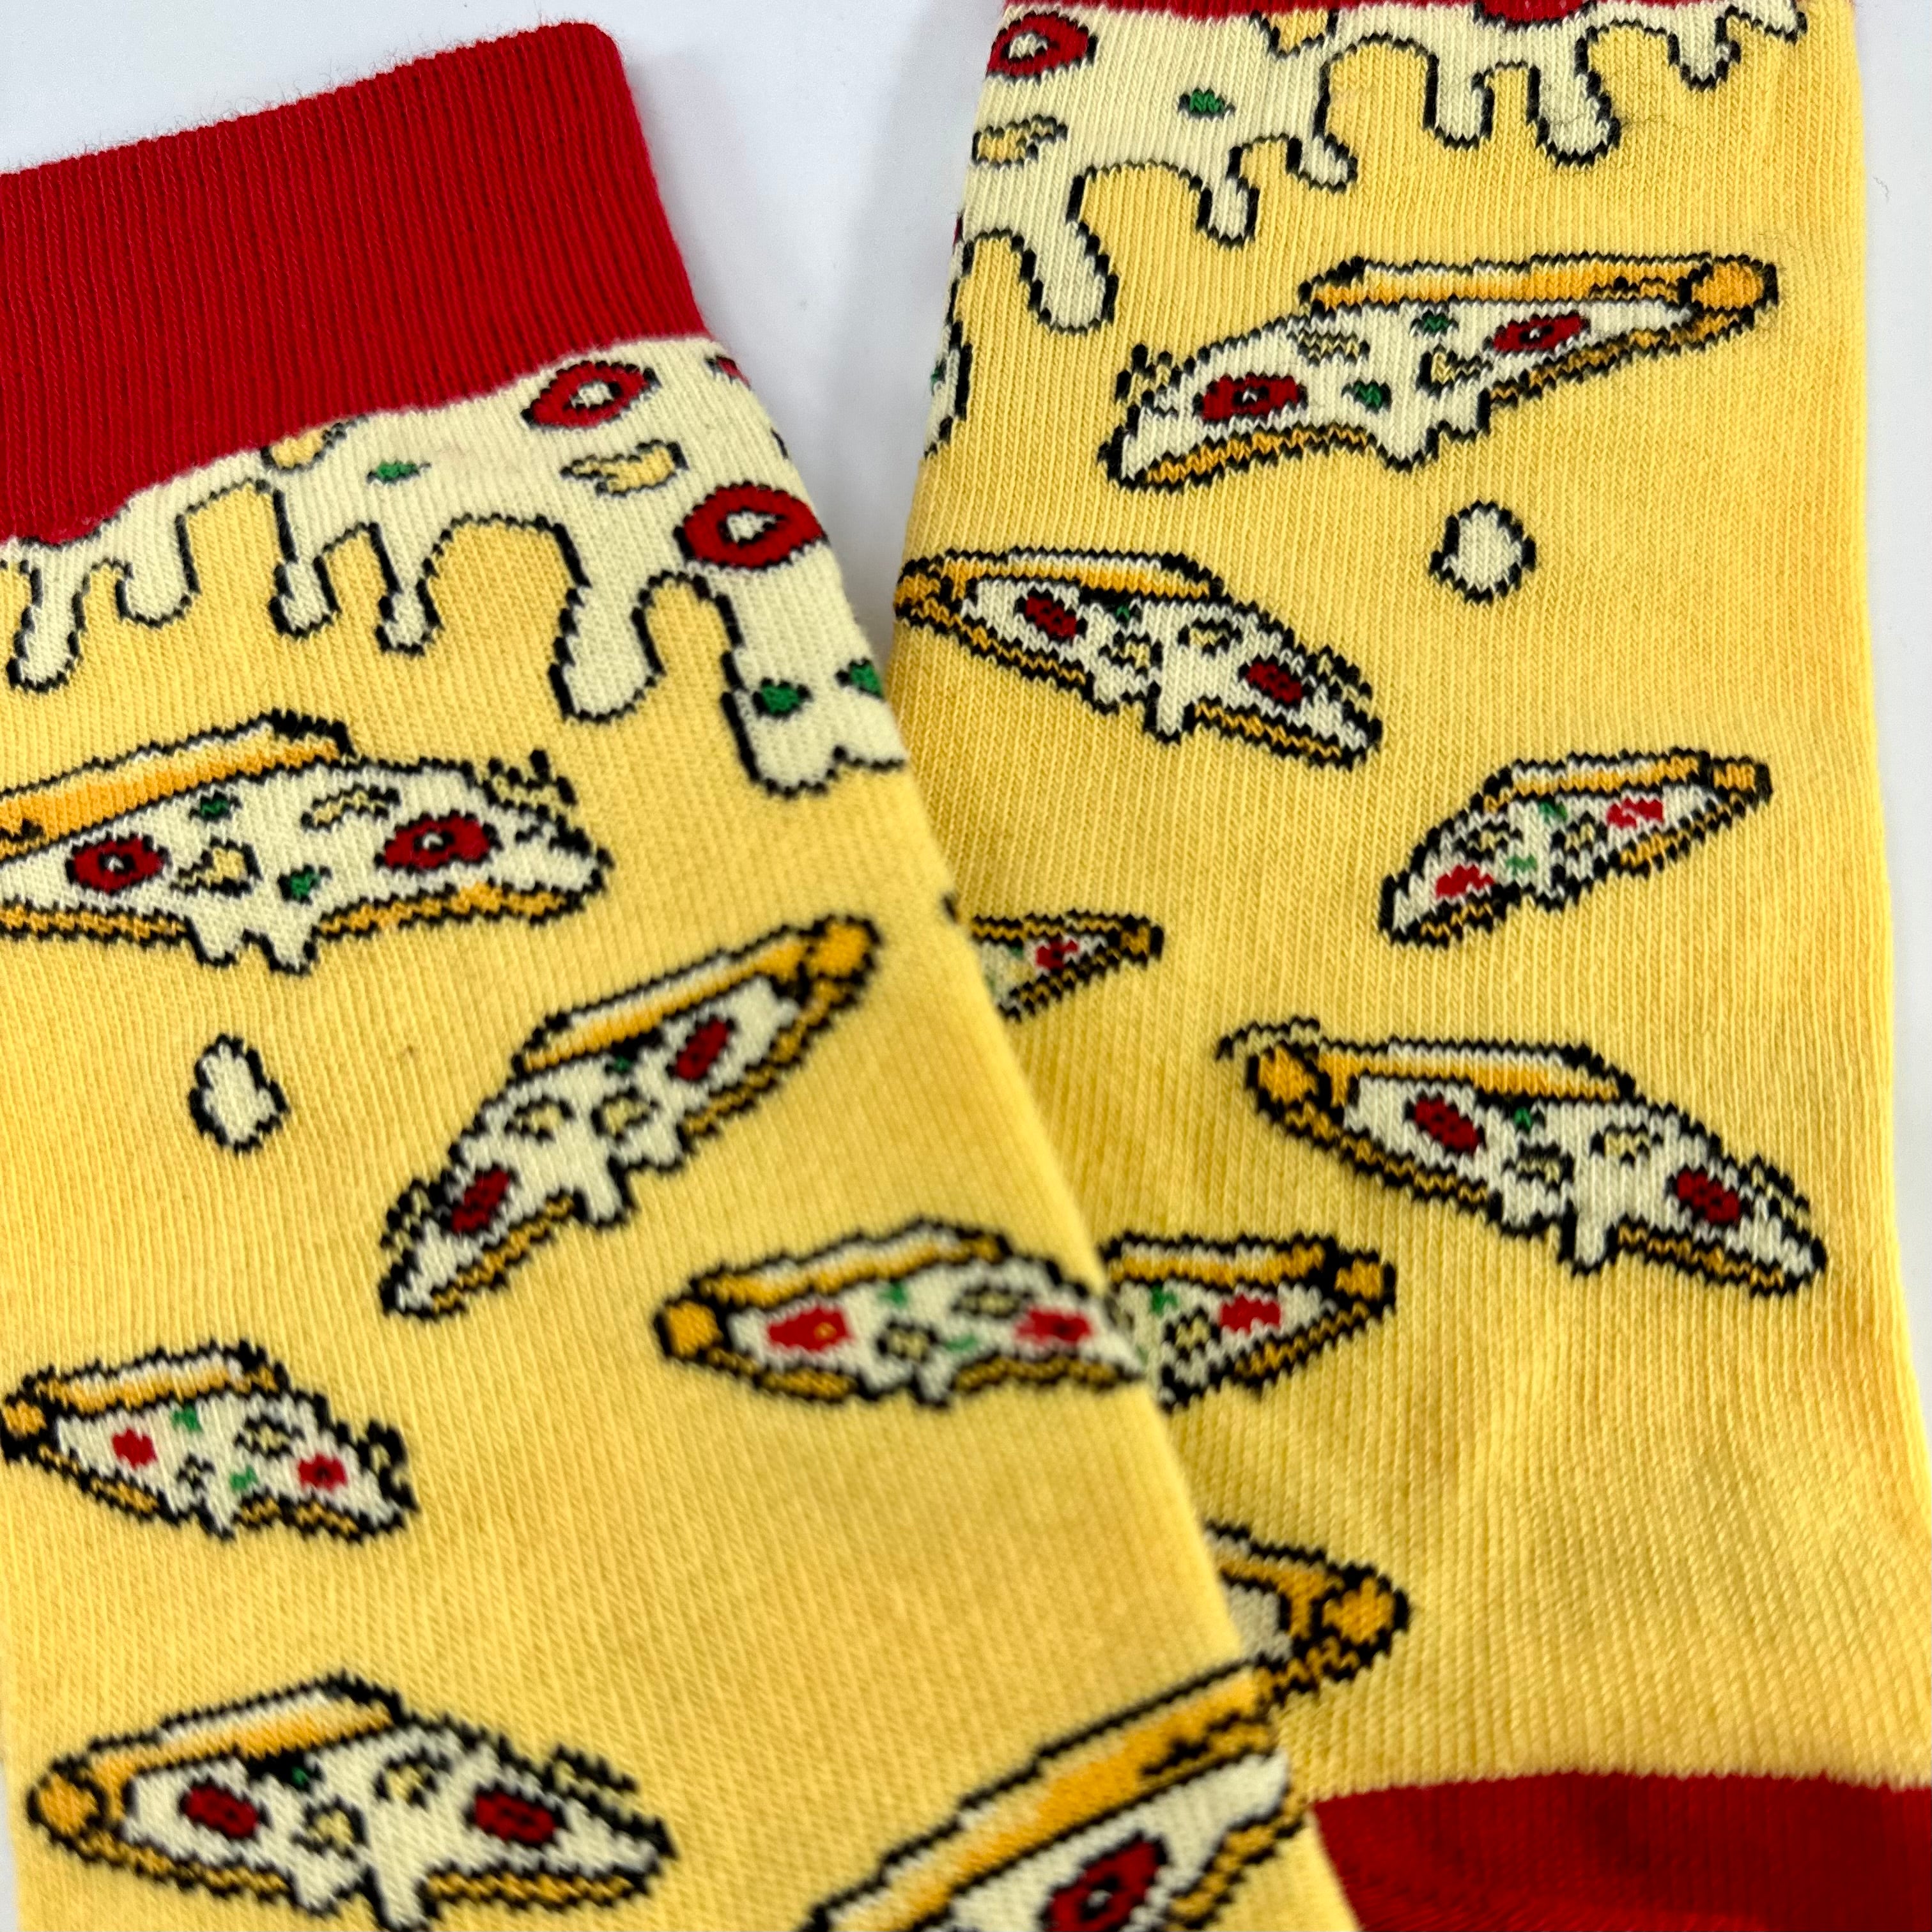 Cheesy Pizza Pattern Socks from the Sock Panda (Adult Small)